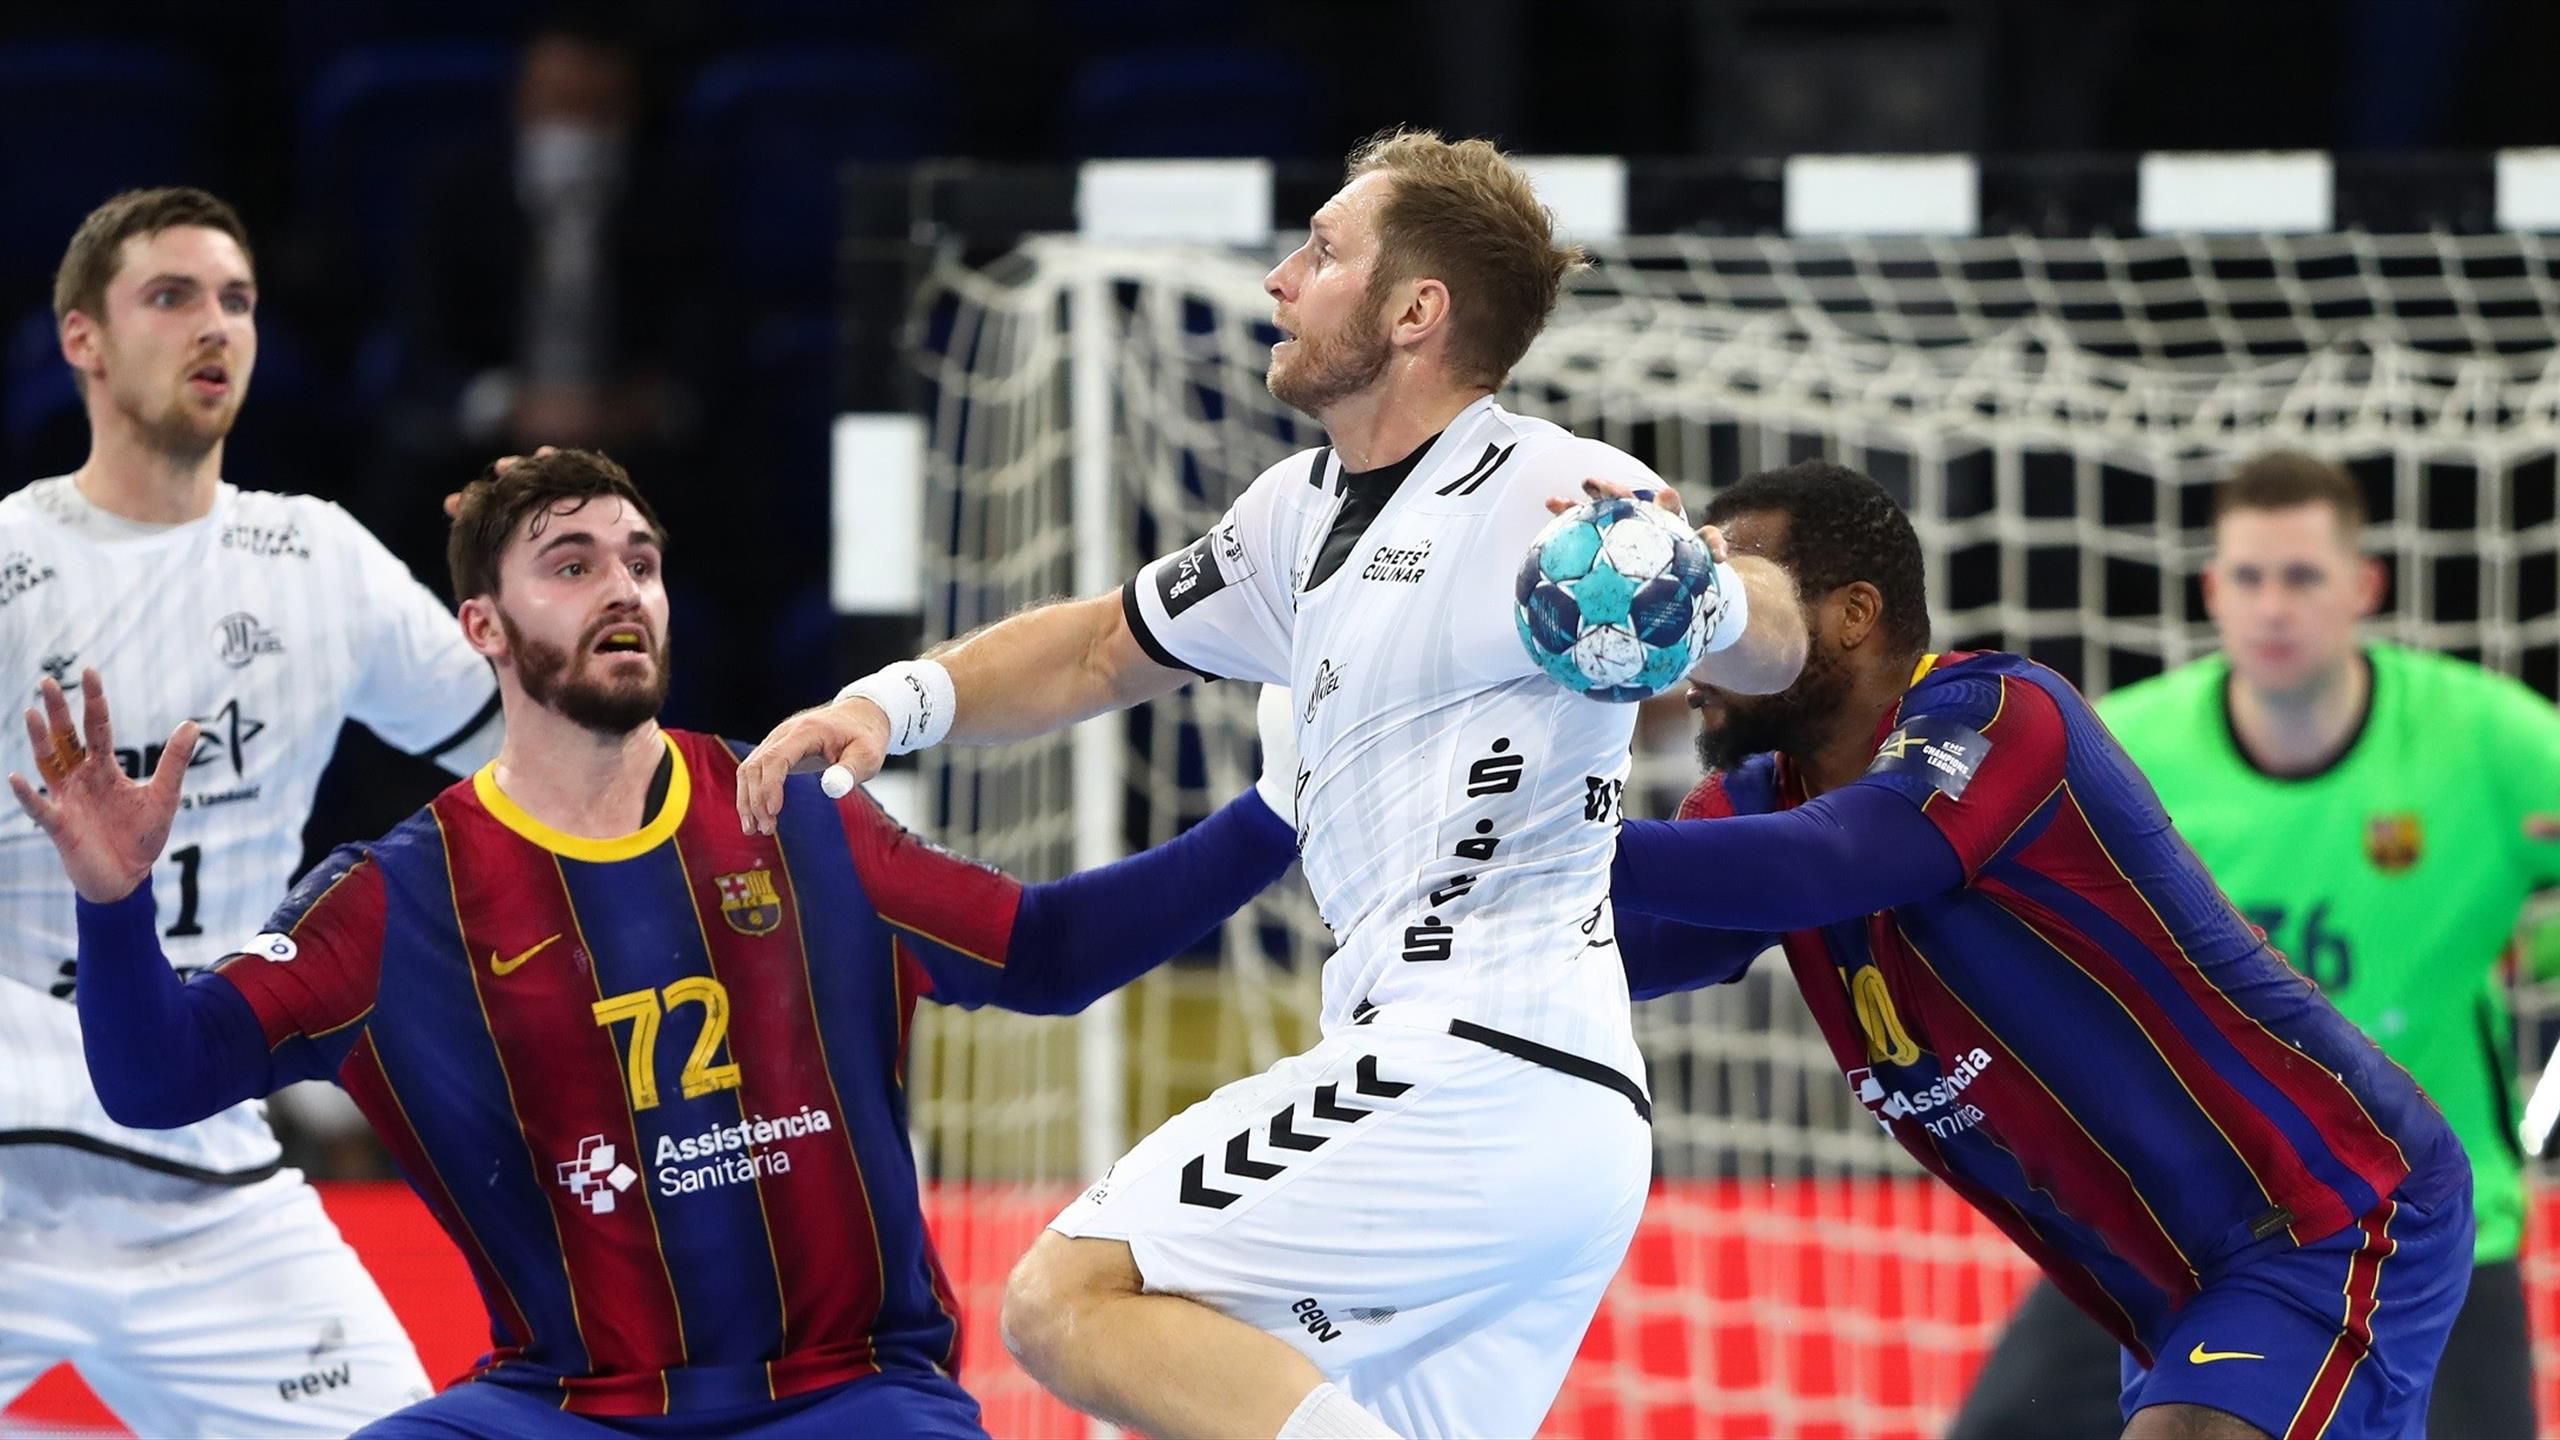 eurosport übertragung handball wm